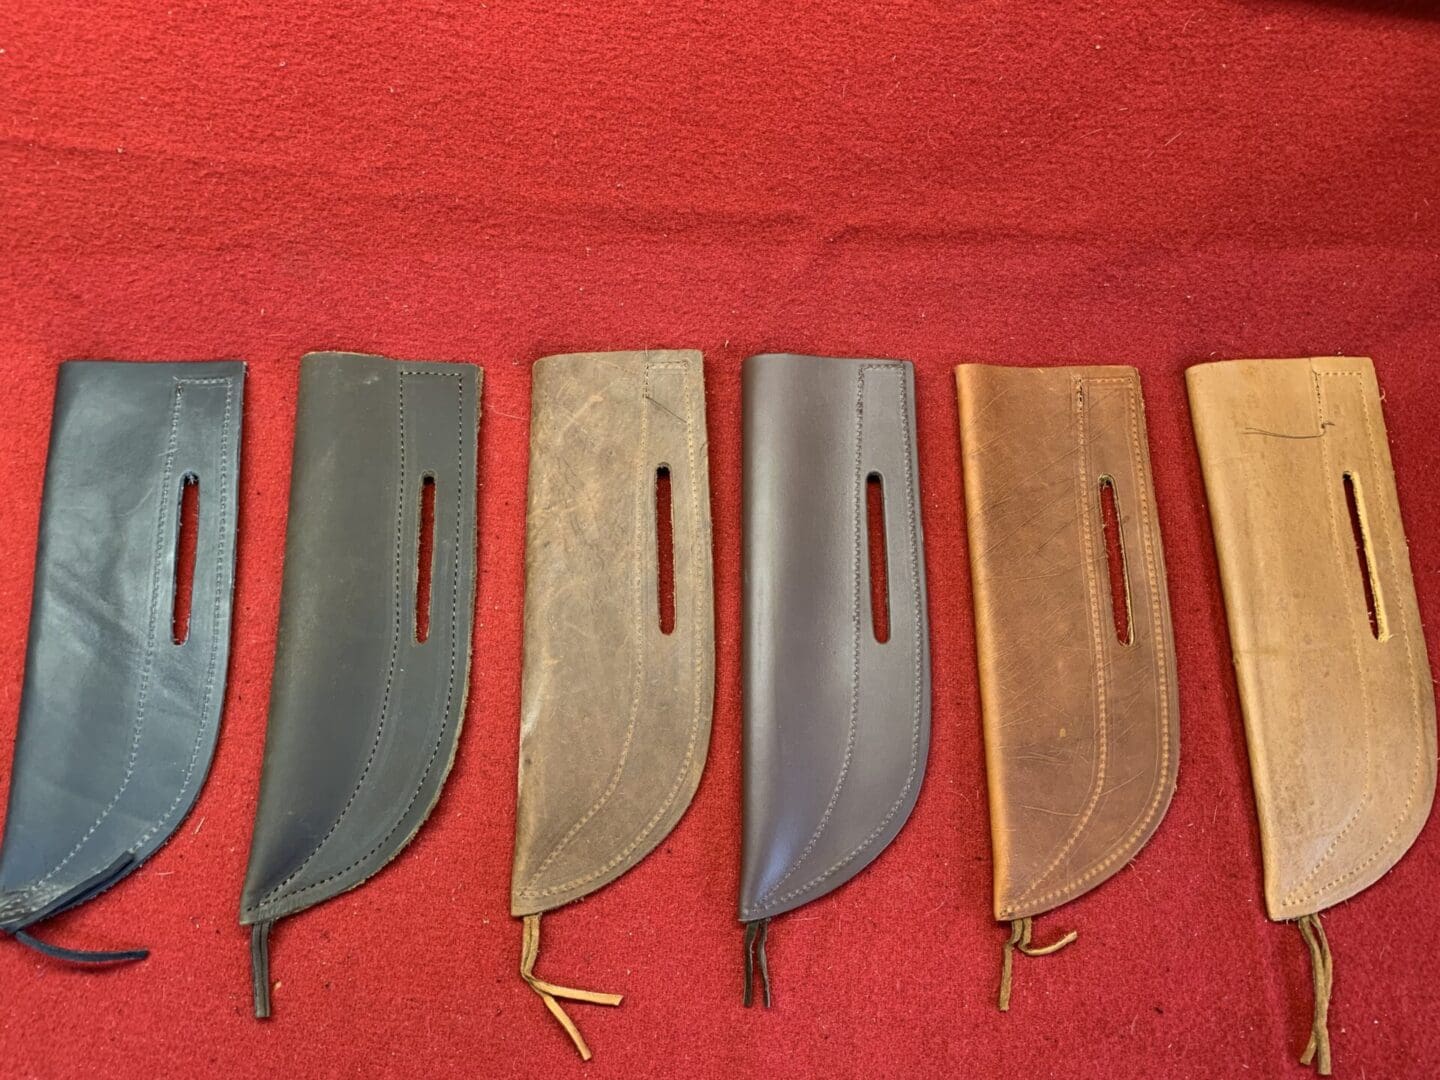 Leather Knife Sheath, 11 inch belt knife sheath